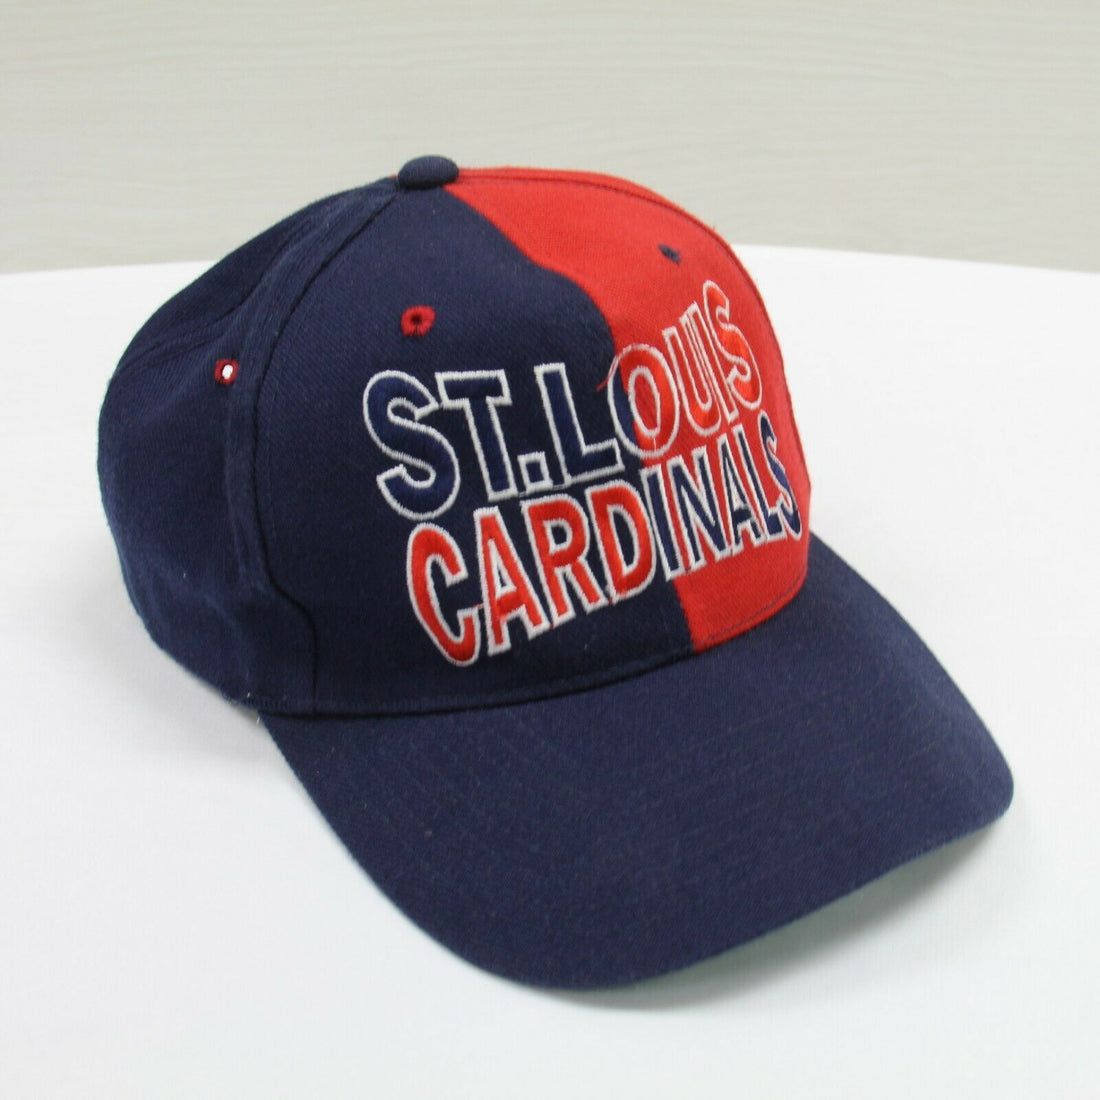 ST. LOUIS CARDINALS VINTAGE 1980'S MLB ANNCO MESH SNAPBACK ADULT HAT M / L